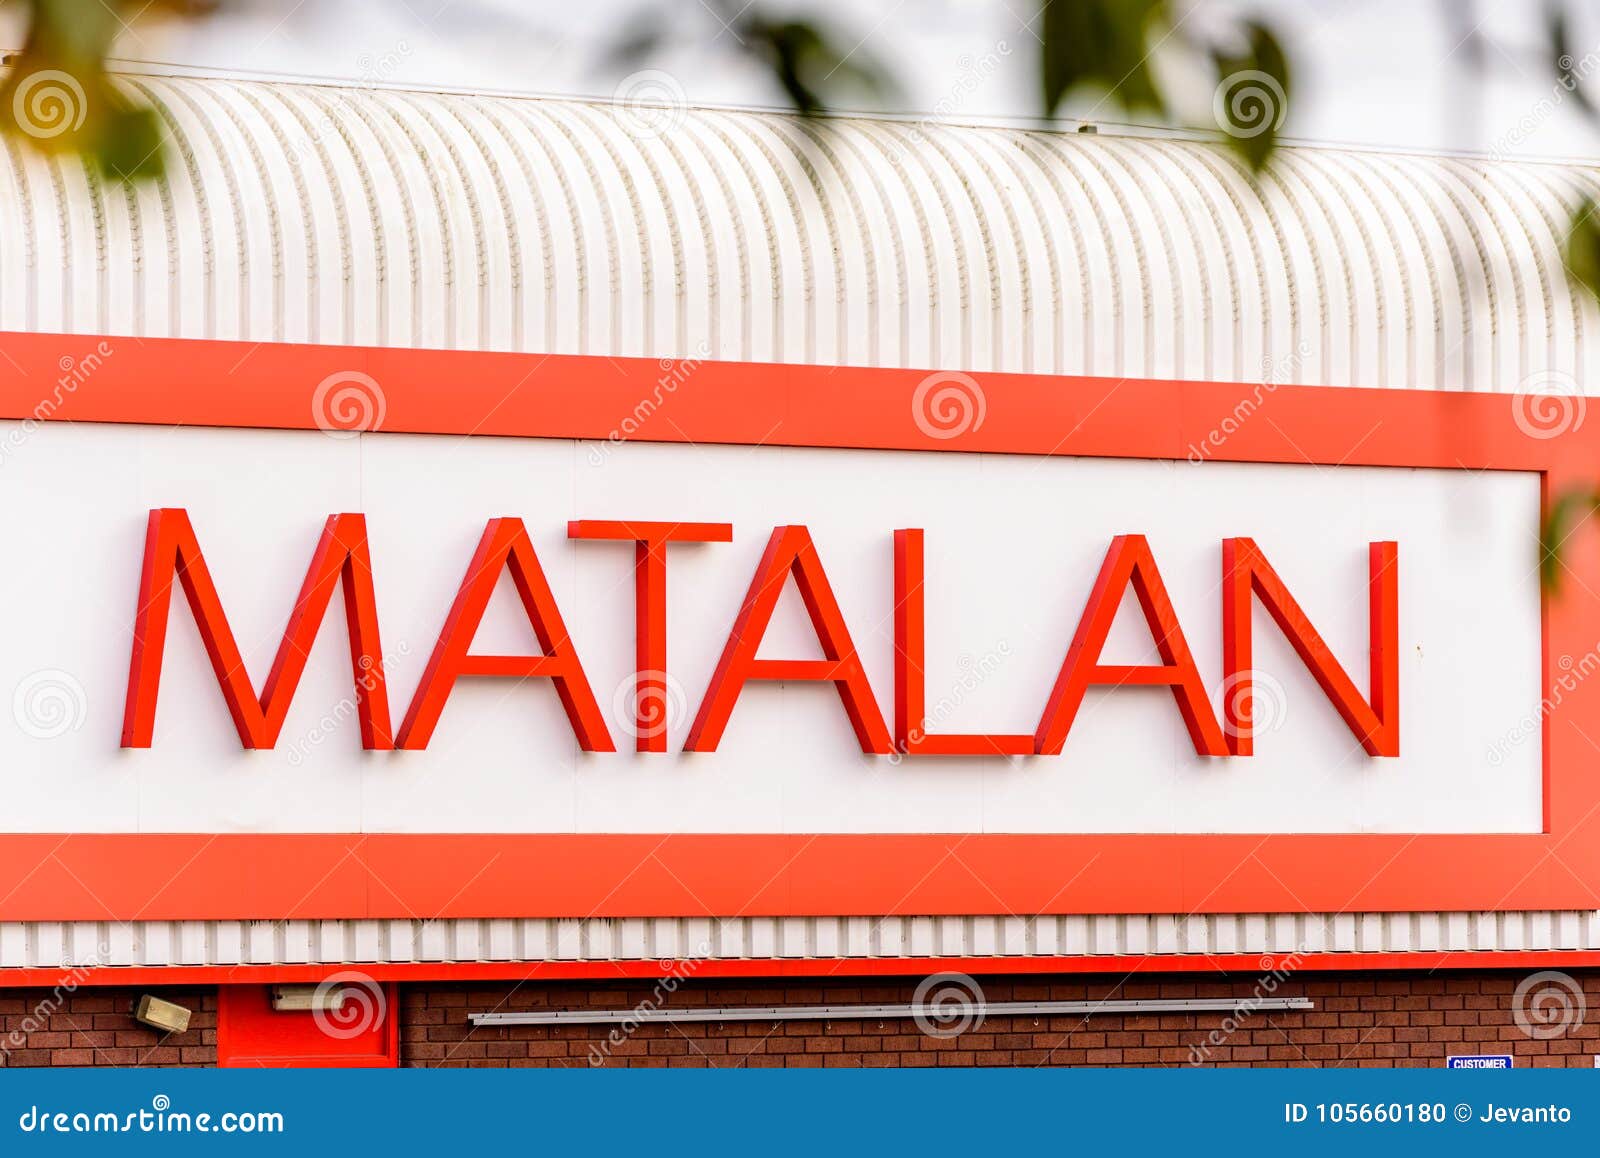 Matalan Stock Photos - Free & Royalty-Free Stock Photos from Dreamstime